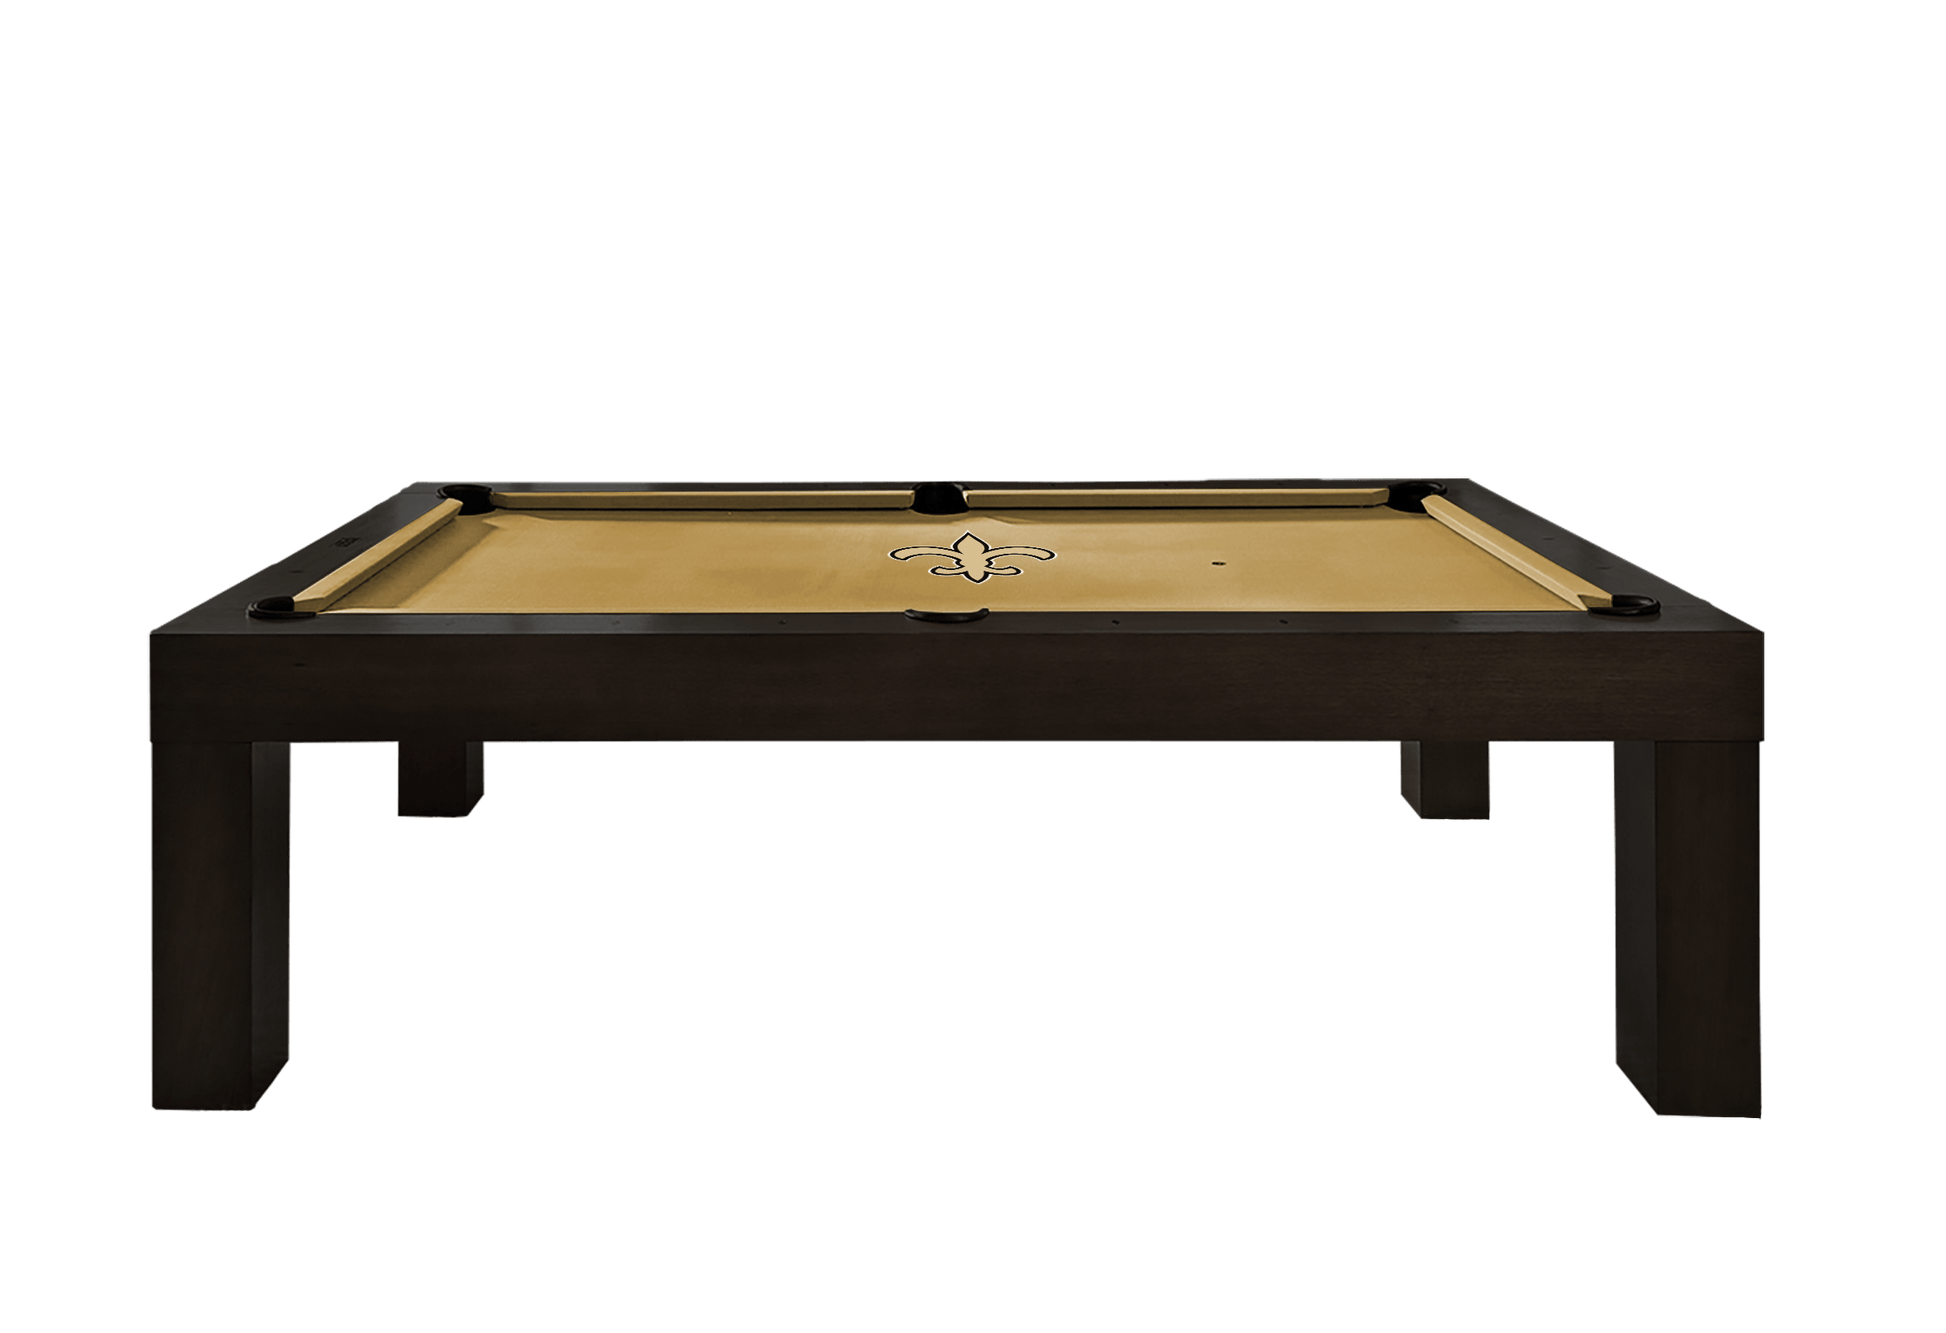 New Orleans Saints Premium Pool Table Bundle - Black Ash Pool Bundle Home Arcade Games   